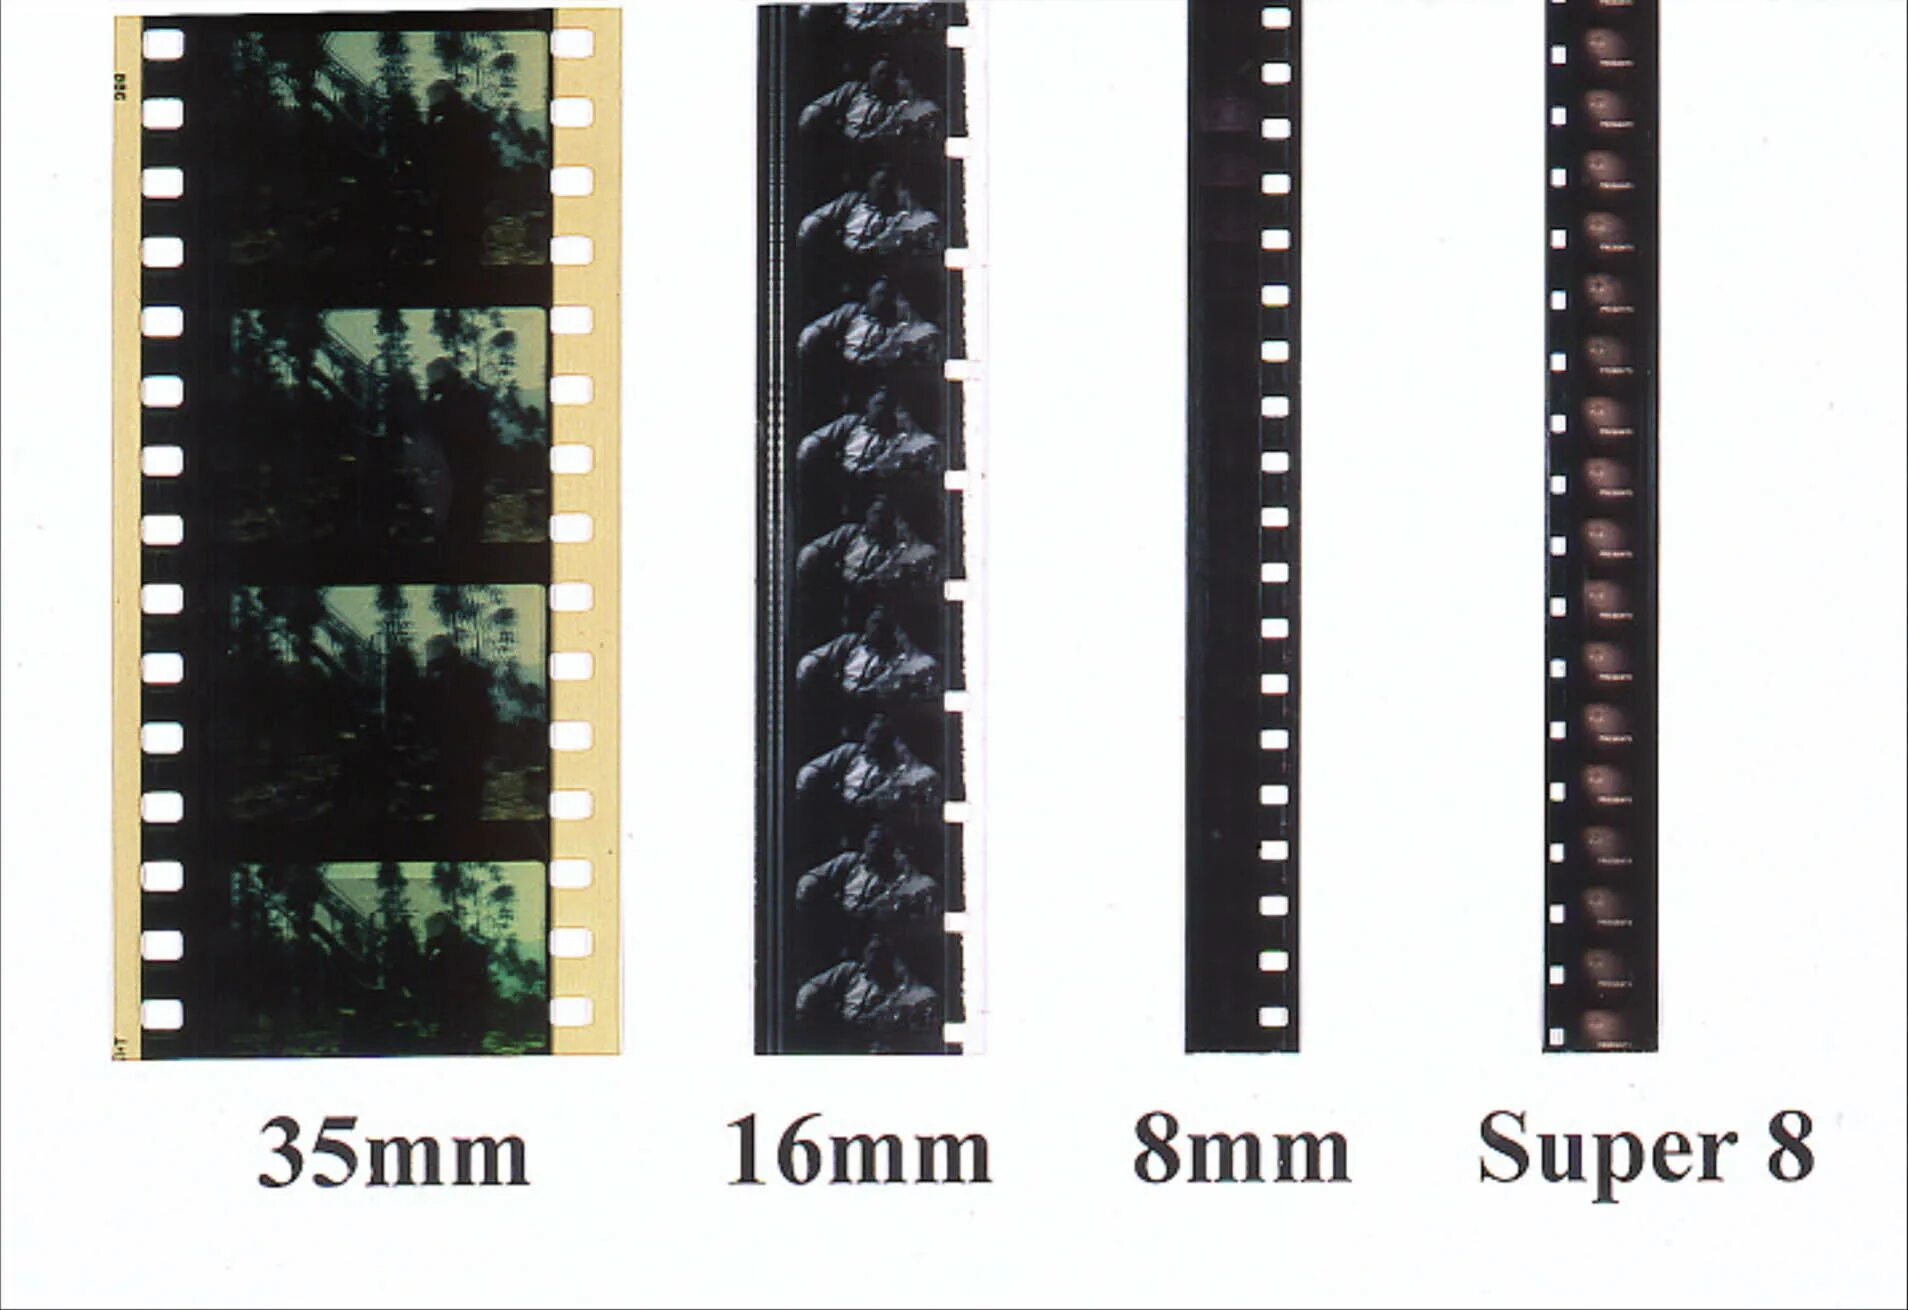 Киноплёнка super 8 мм. Кинопленка Kodak 35mm Кадр стандарт перфорации. Размер кадра 8 мм кинопленки. 35-Мм киноплёнка. Как отличить пленку